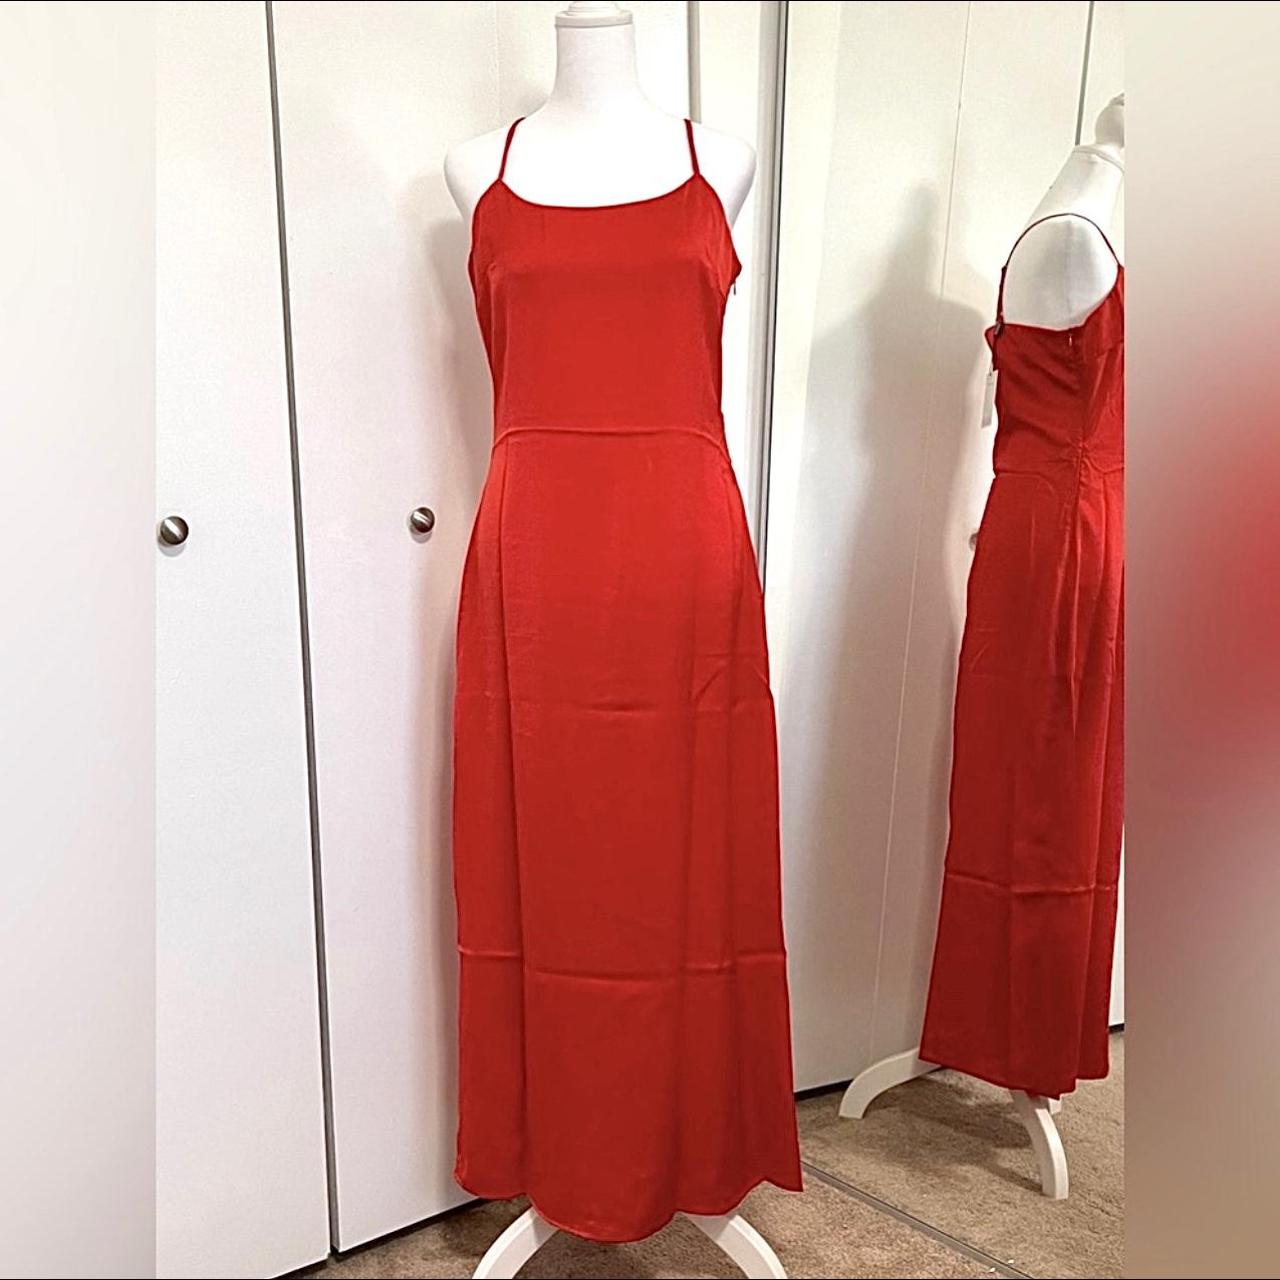 Lola May Women's Red Dress